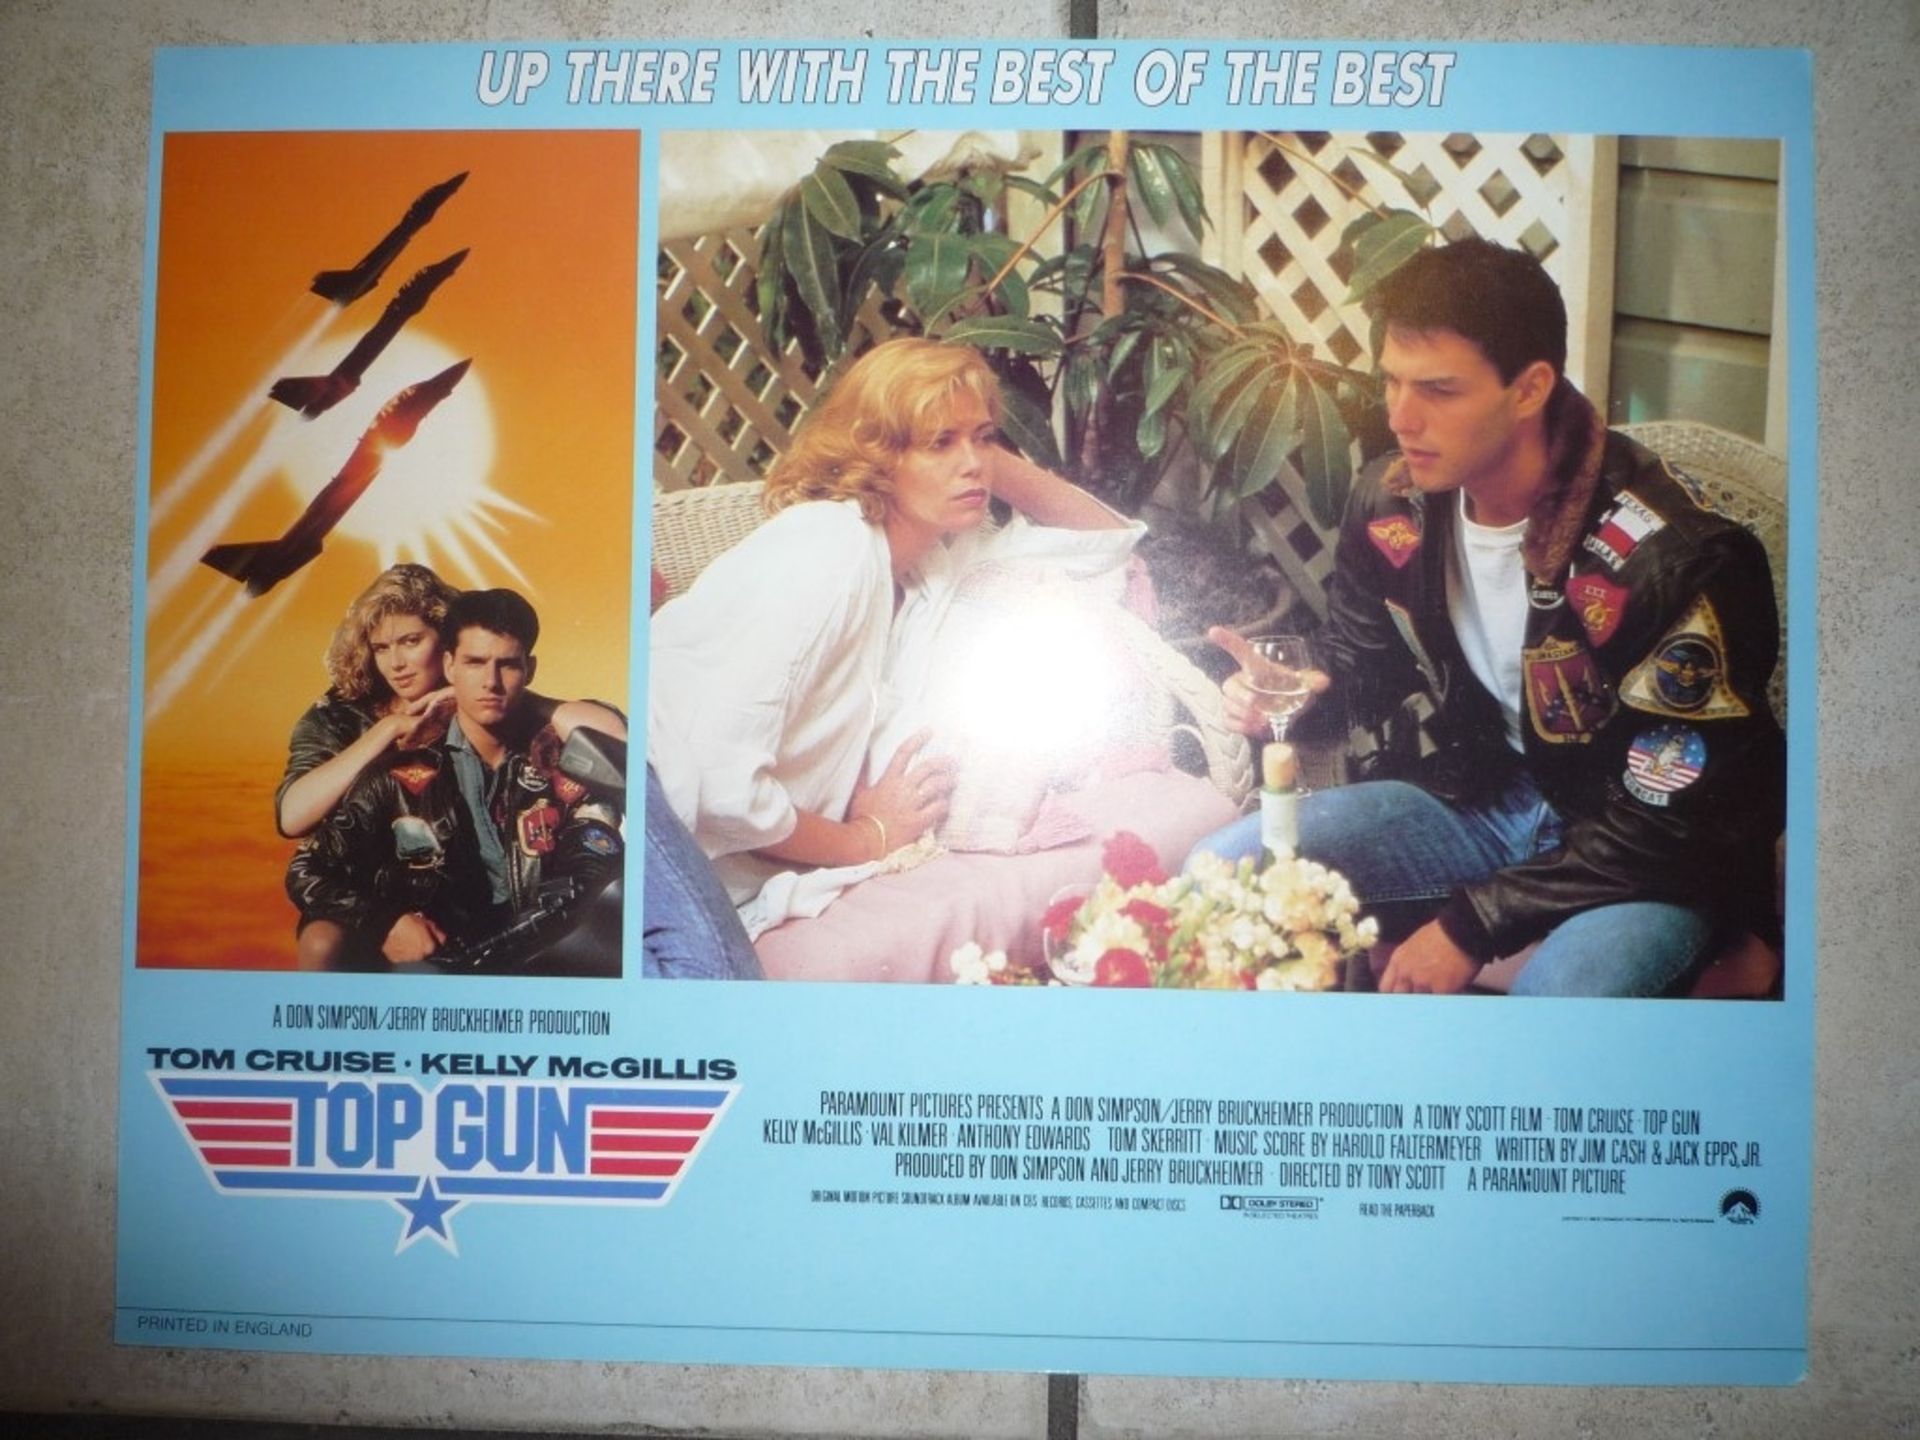 Top Gun lobby card - Image 2 of 2